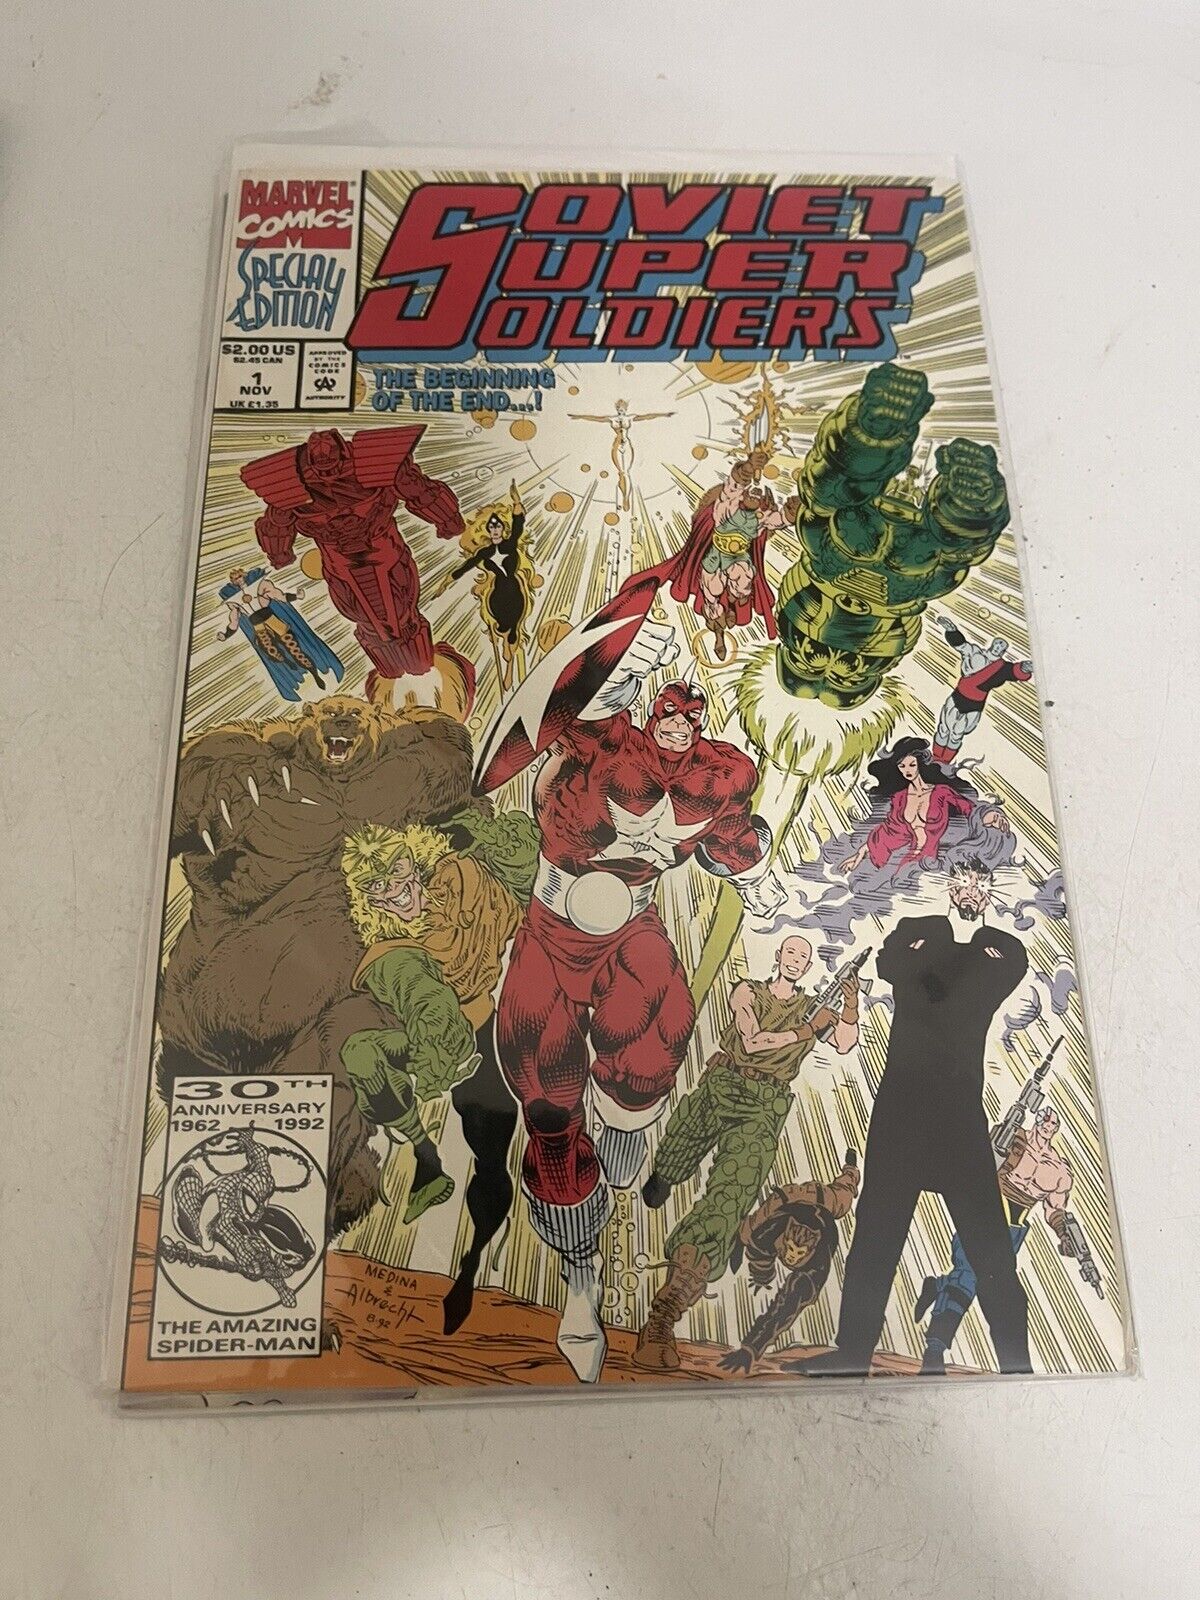 Soviet Super Soldiers #1 Marvel Comics Book